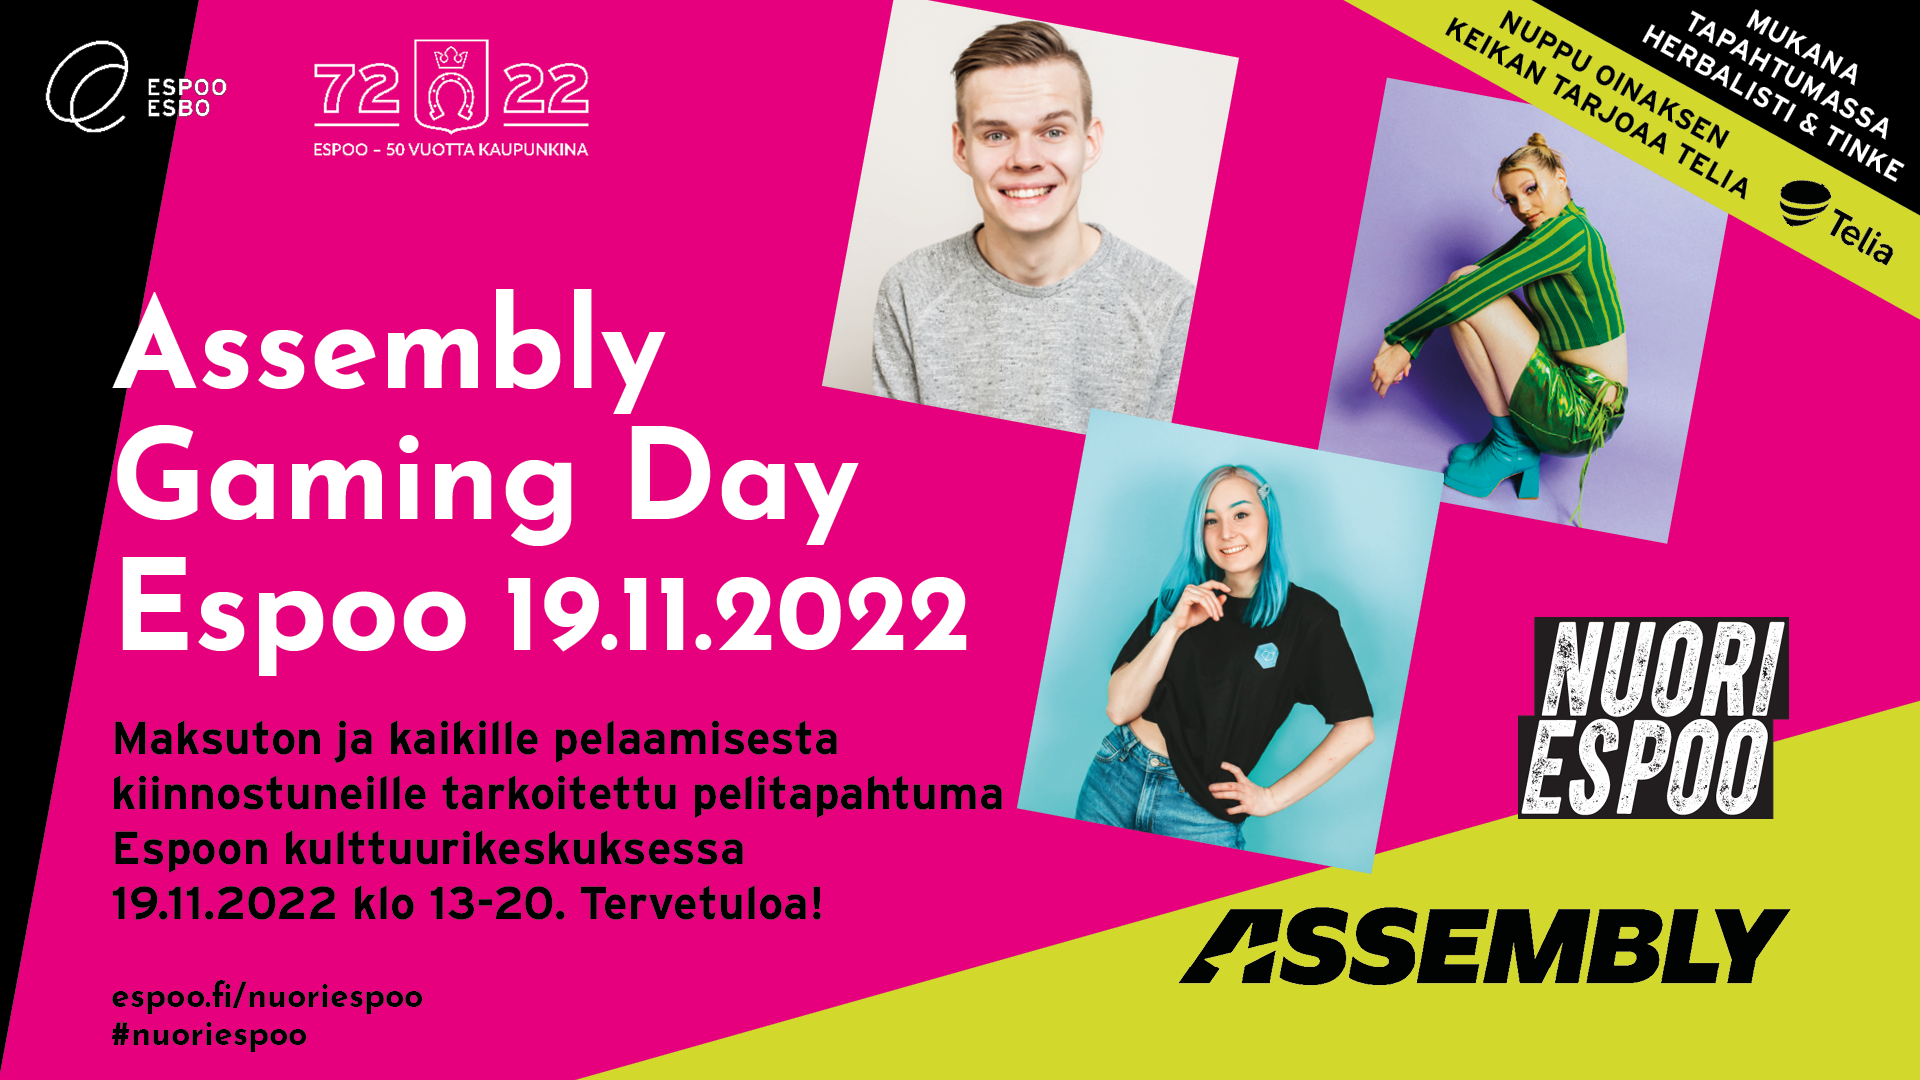  Assembly Gaming Day Espoo 19.11.2022